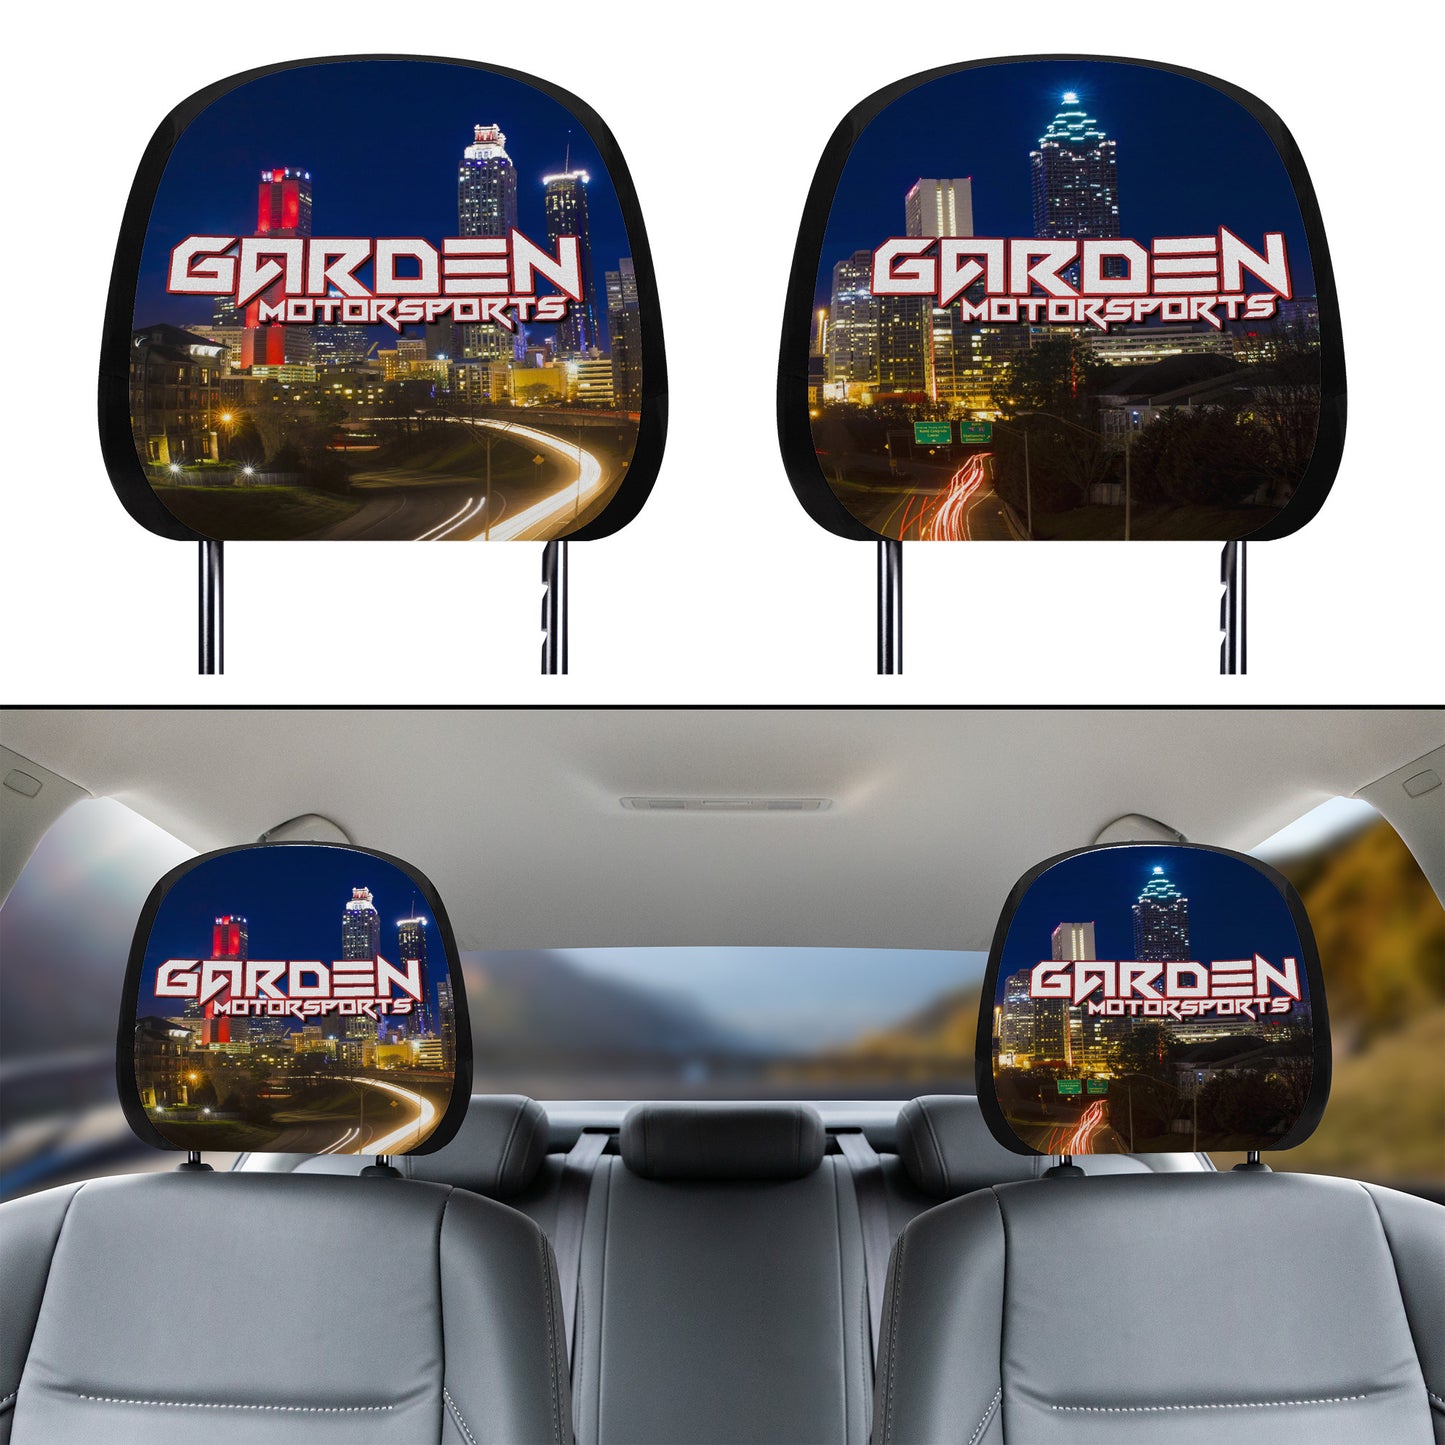 Garden motorsports Car Headrest Covers